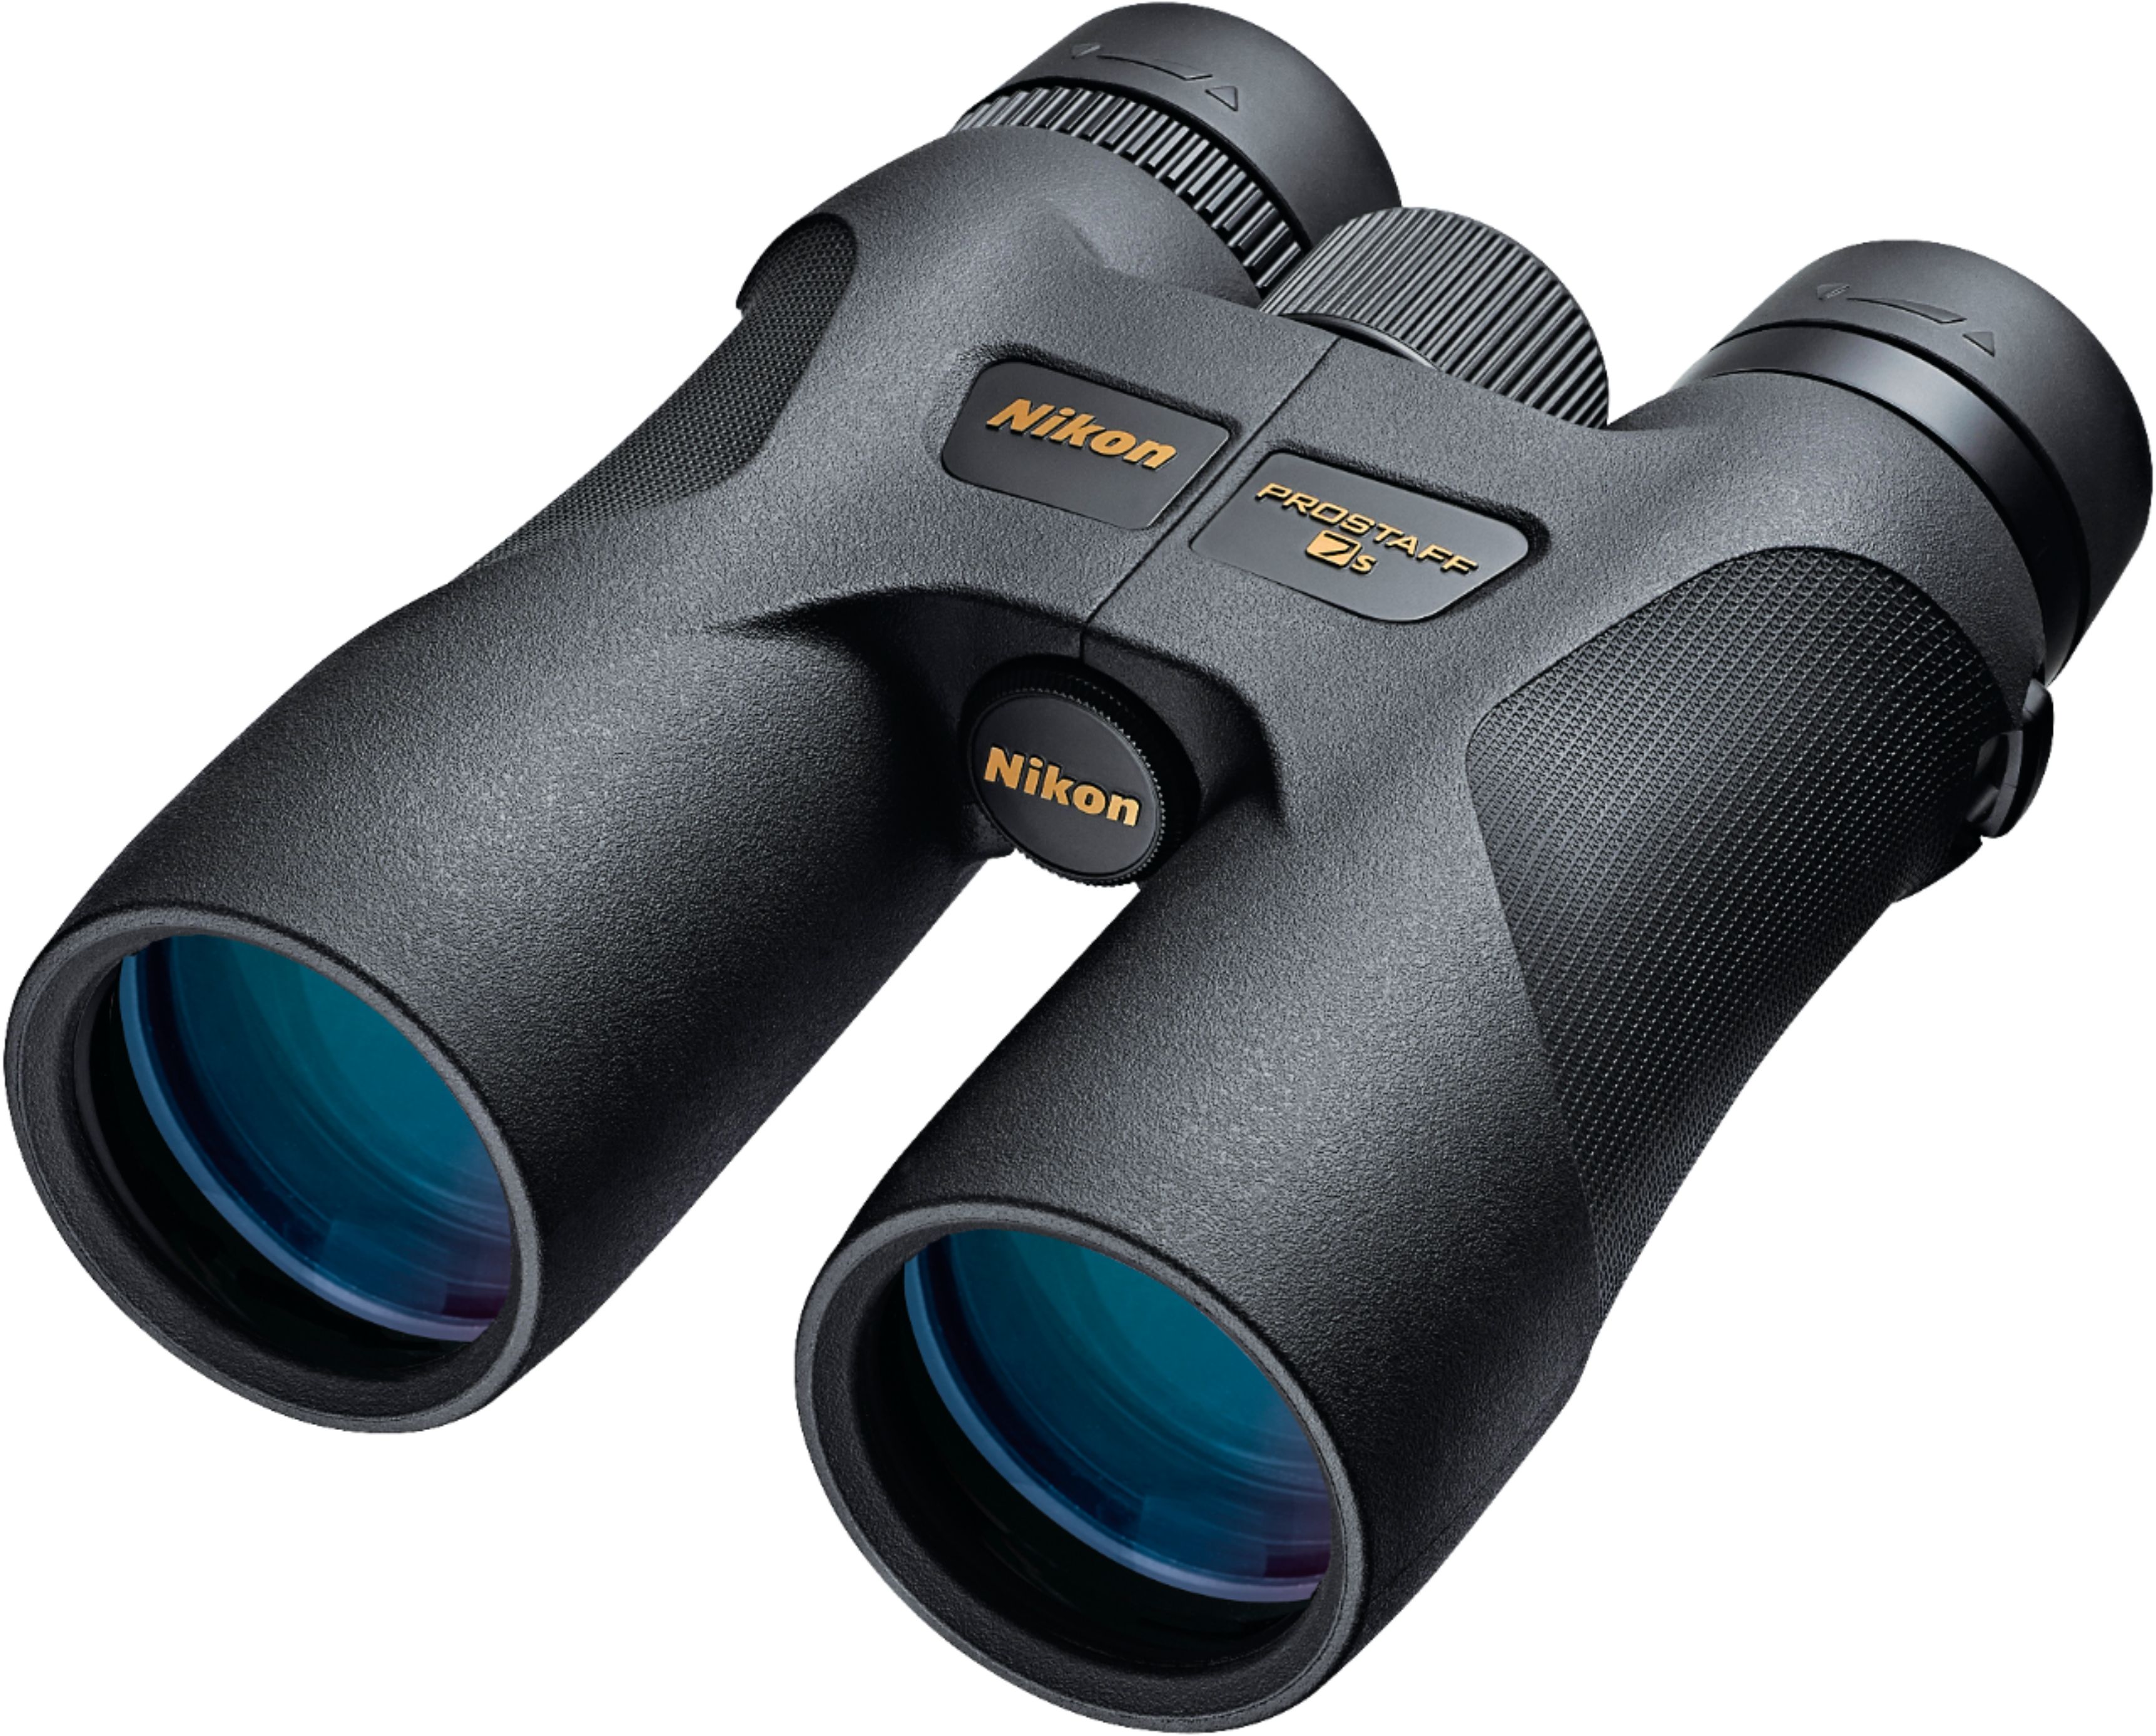 Angle View: Nikon - ProStaff 8 x 42 Binoculars - Black